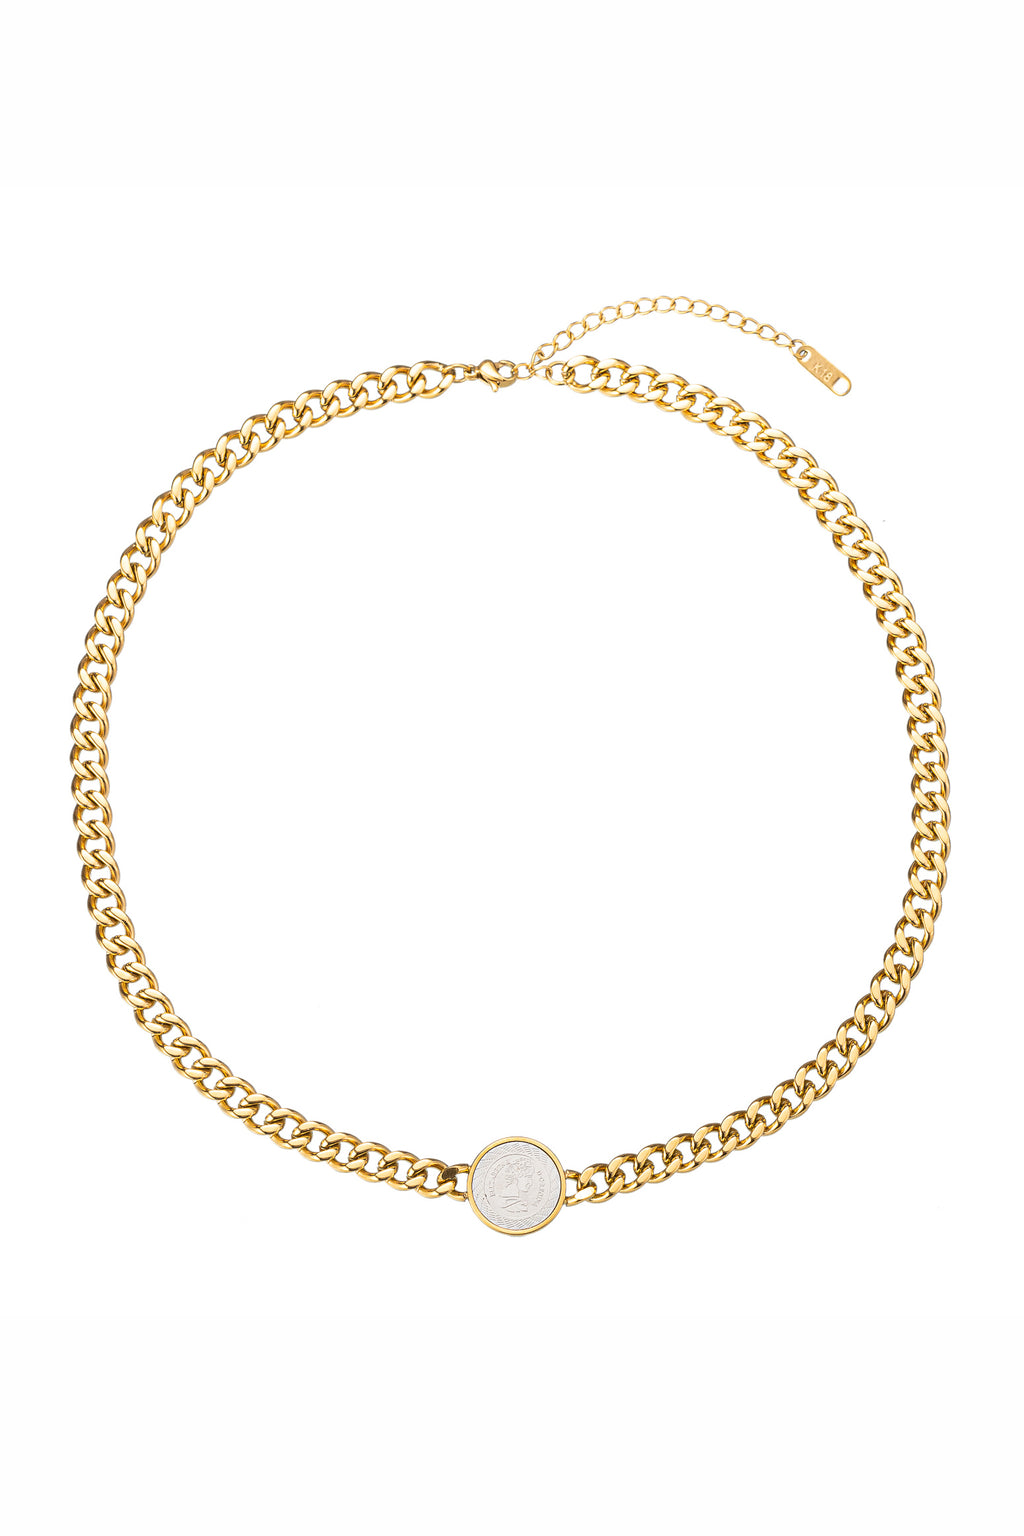 Gold tone titanium necklace with a coin pendant.